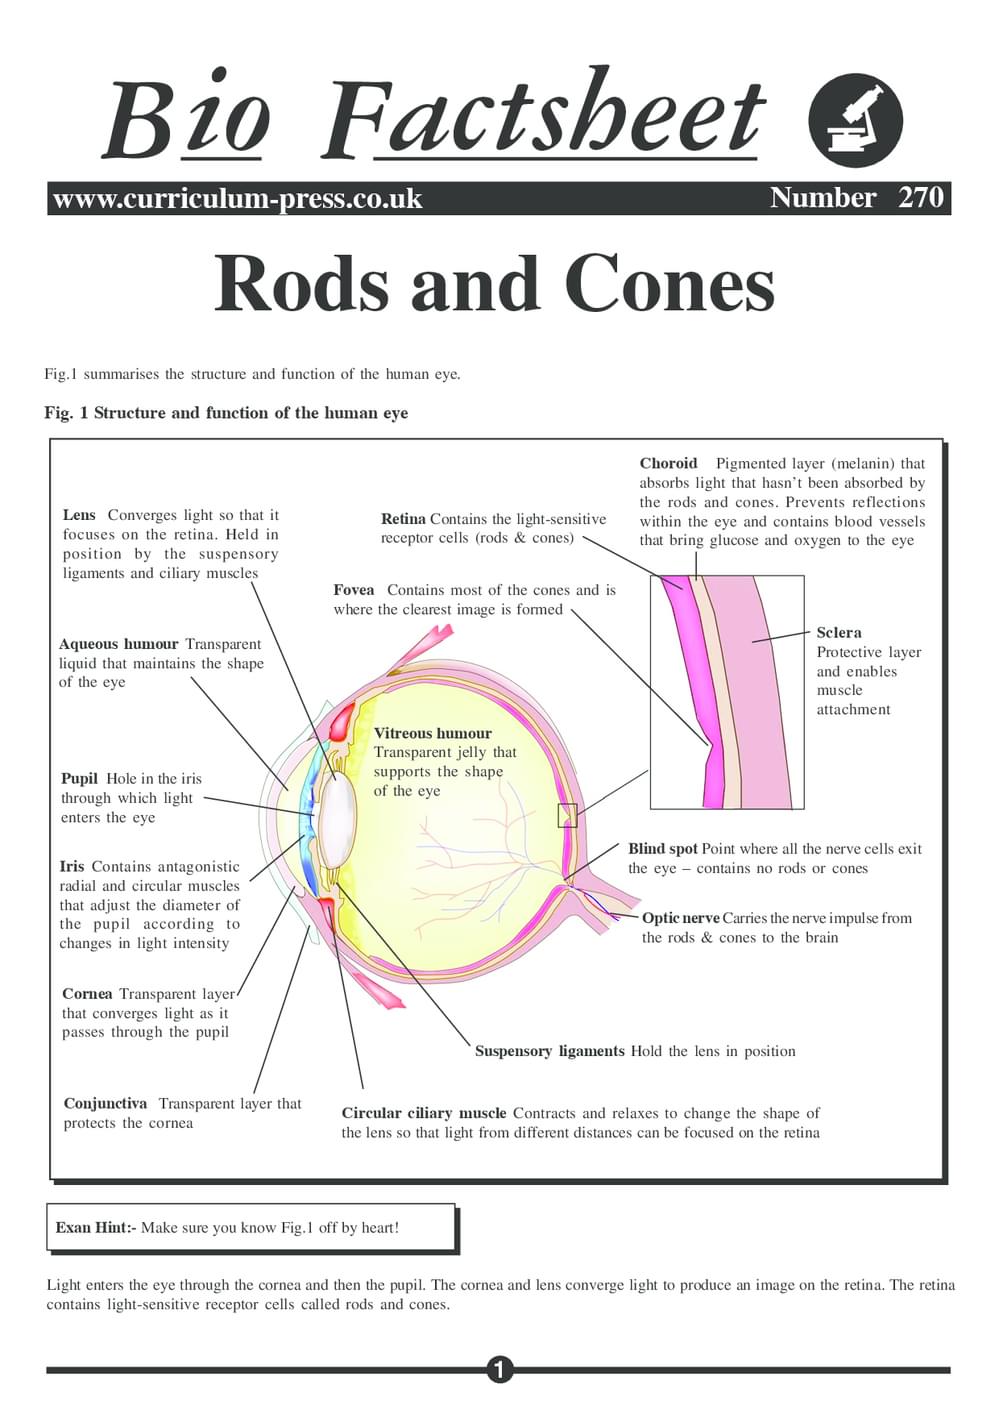 Rods and Cones - Curriculum Press